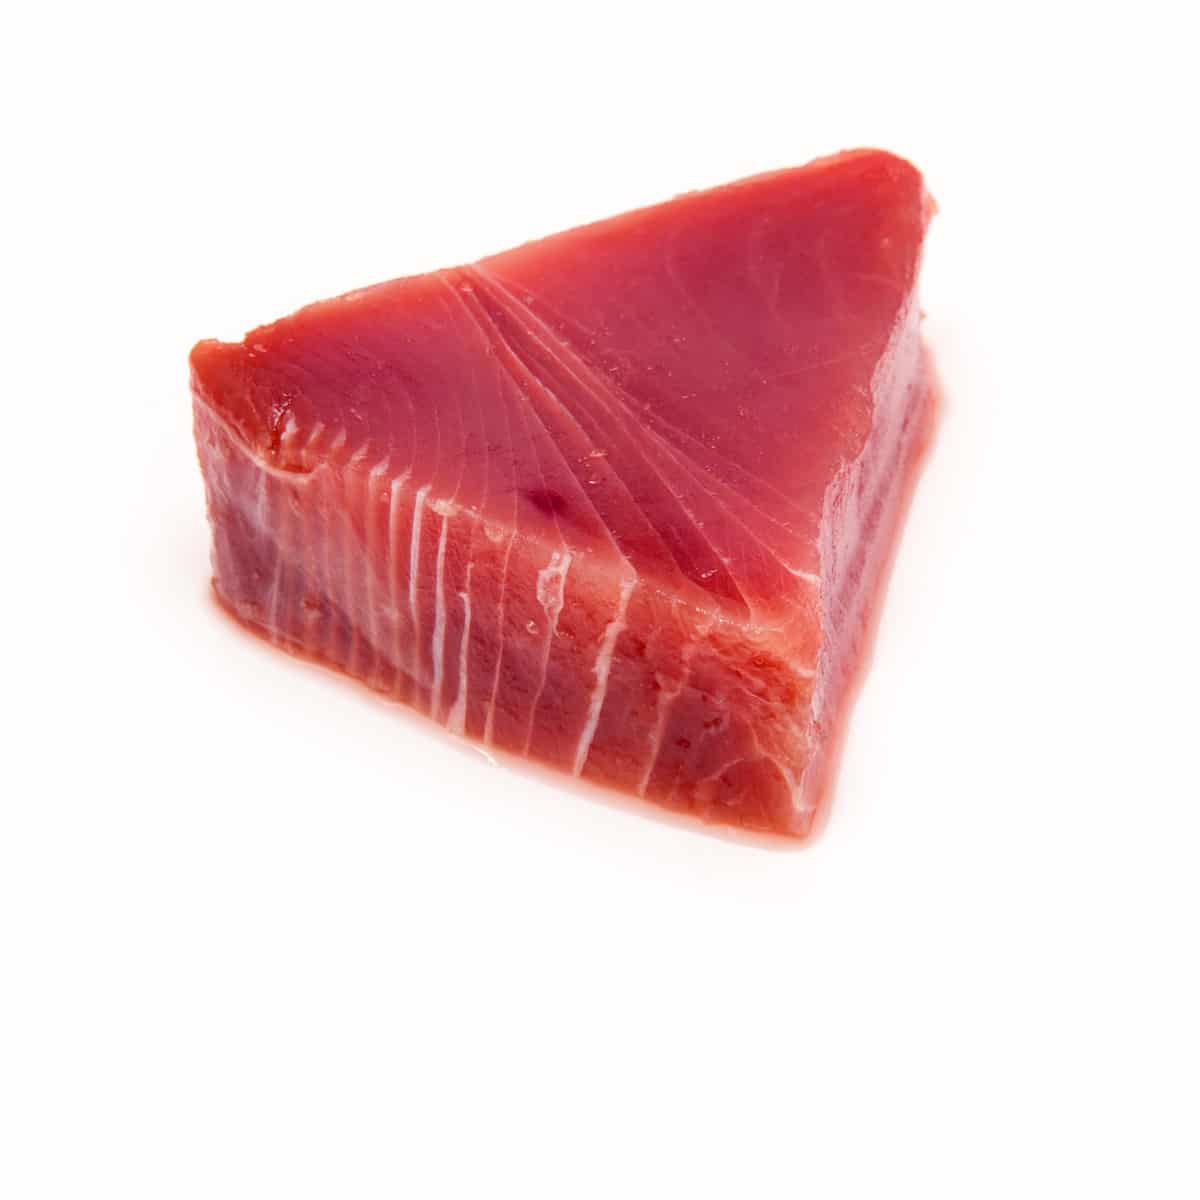 Raw yellowfin tuna steak on white background